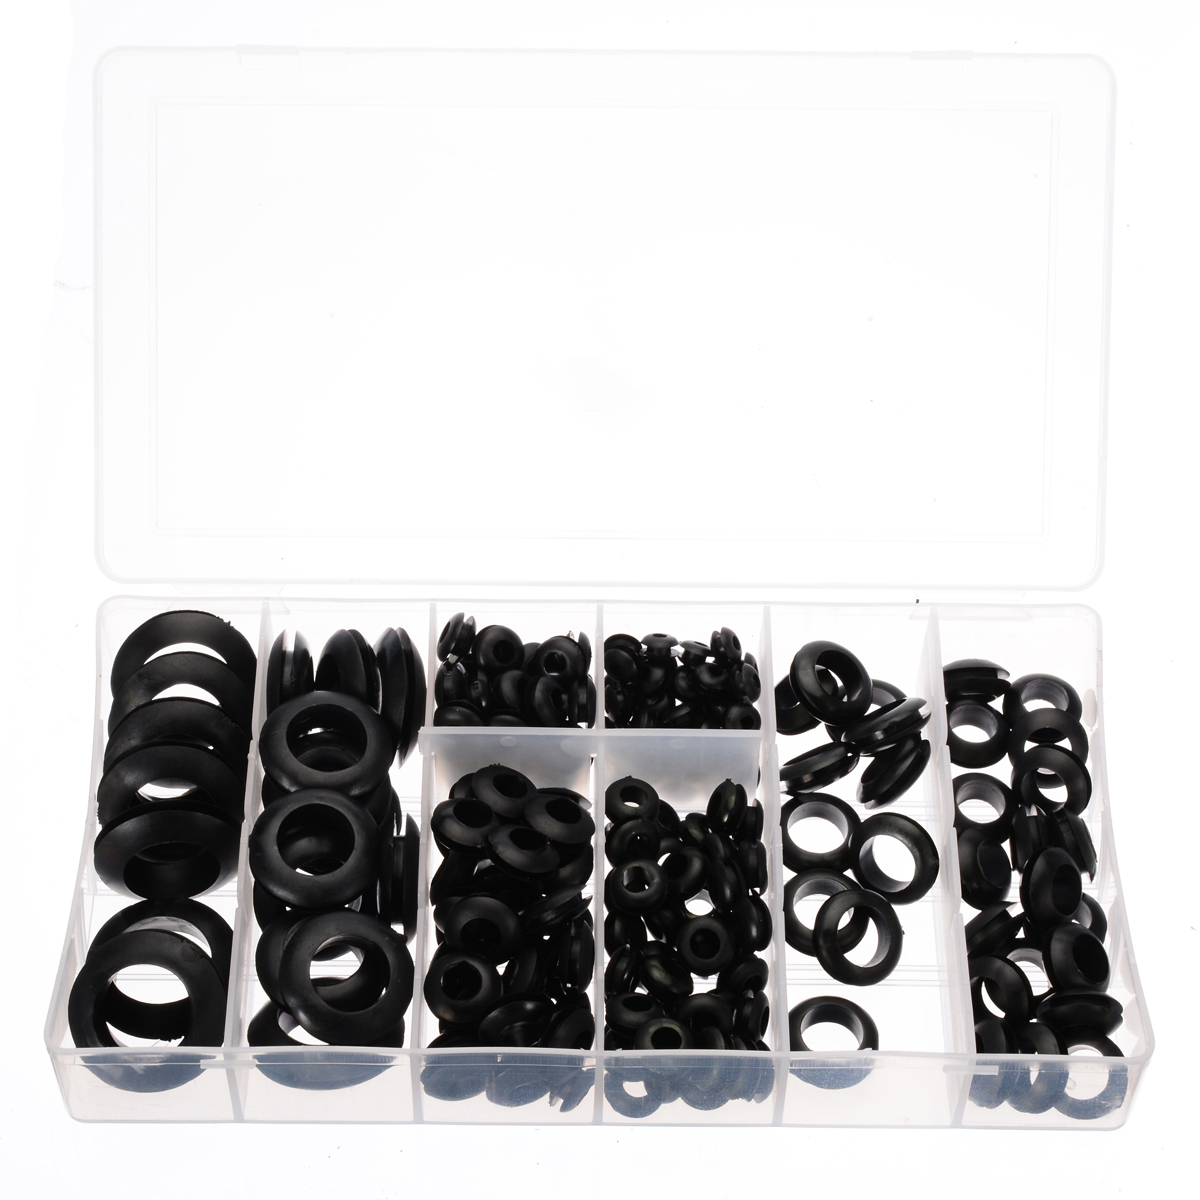 200pcs Rubber Grommet Assortment Set Black Electrical Wire Gasket Kit With a PVC Storage Case